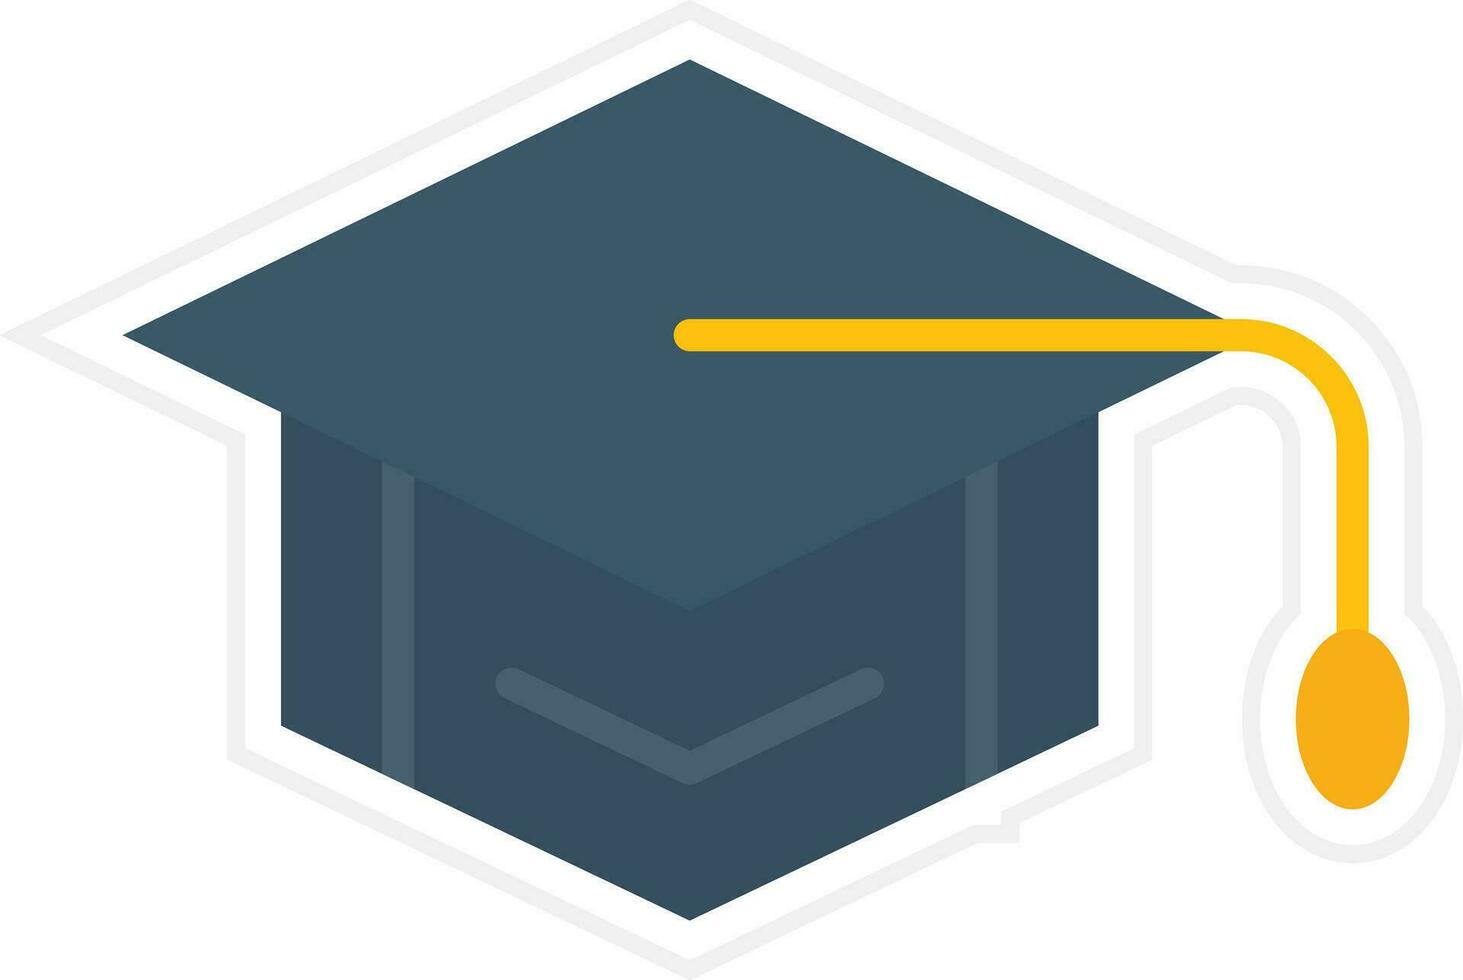 Student Hat Vector Icon